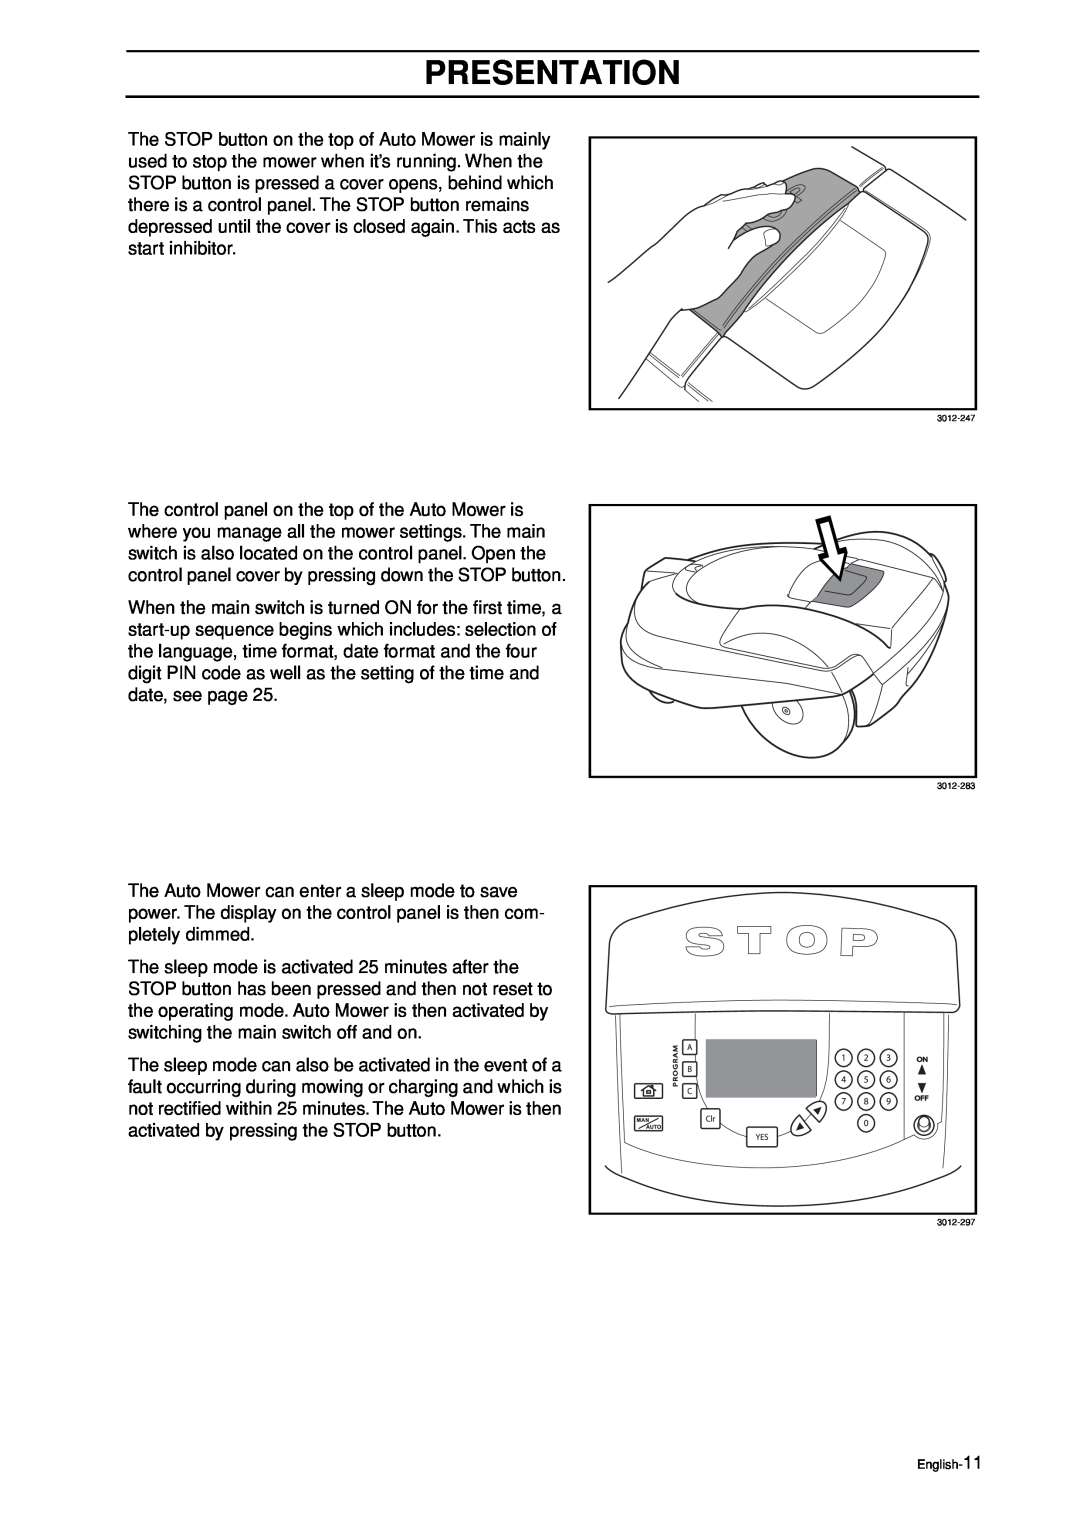 Husqvarna Auto Mower manual Presentation, English-11 